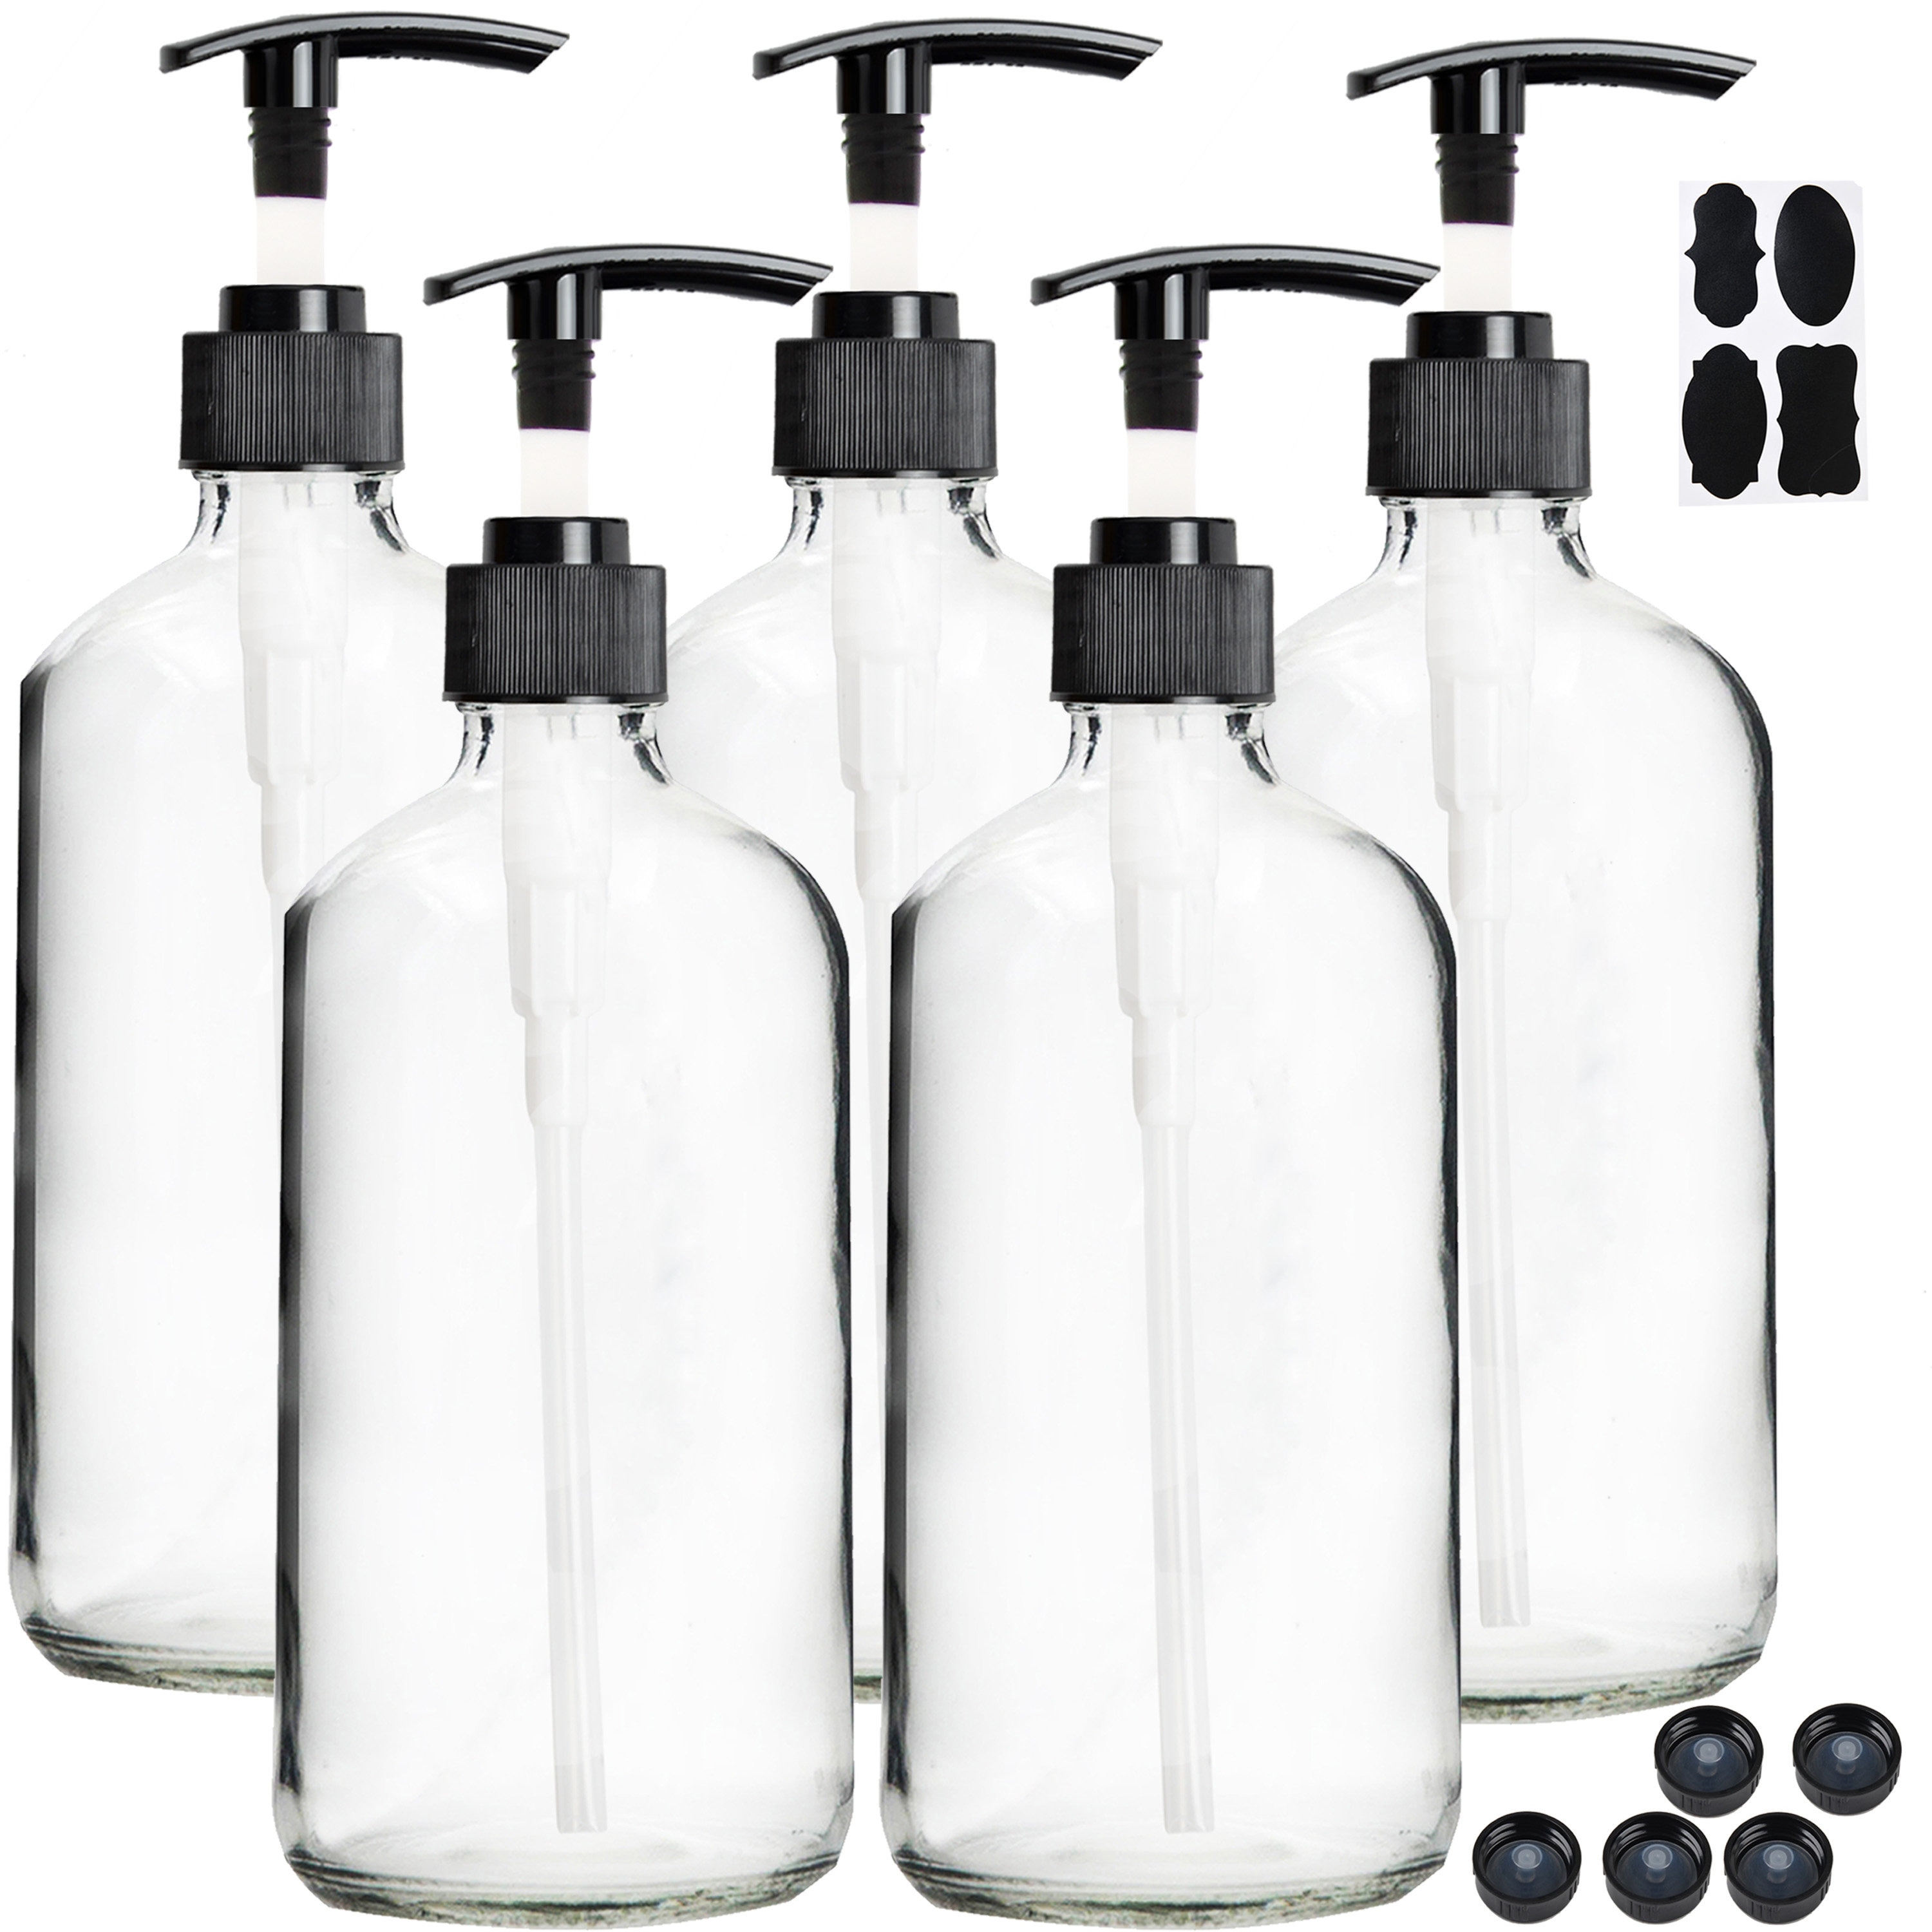 x Lent Clear Soap Dispenser with Rust Proof Pump, Waterproof Labels (2 Pack,16 oz), Soap Dispenser Bathroom, Plastic Hand Soap/Dish Soap Dispenser for